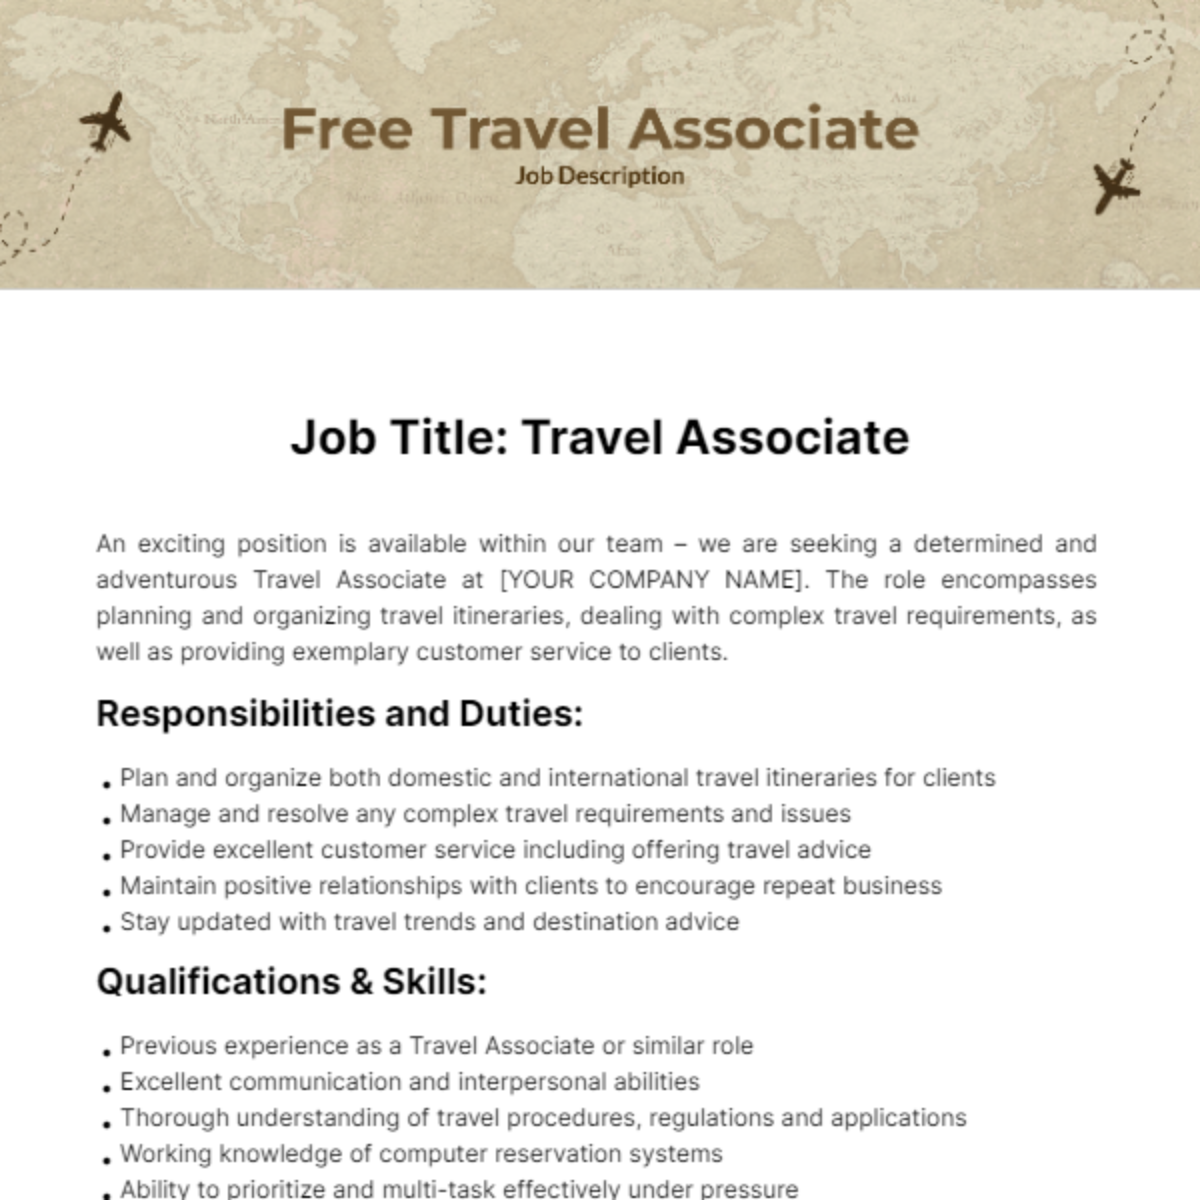 Travel Associate Job Description Template